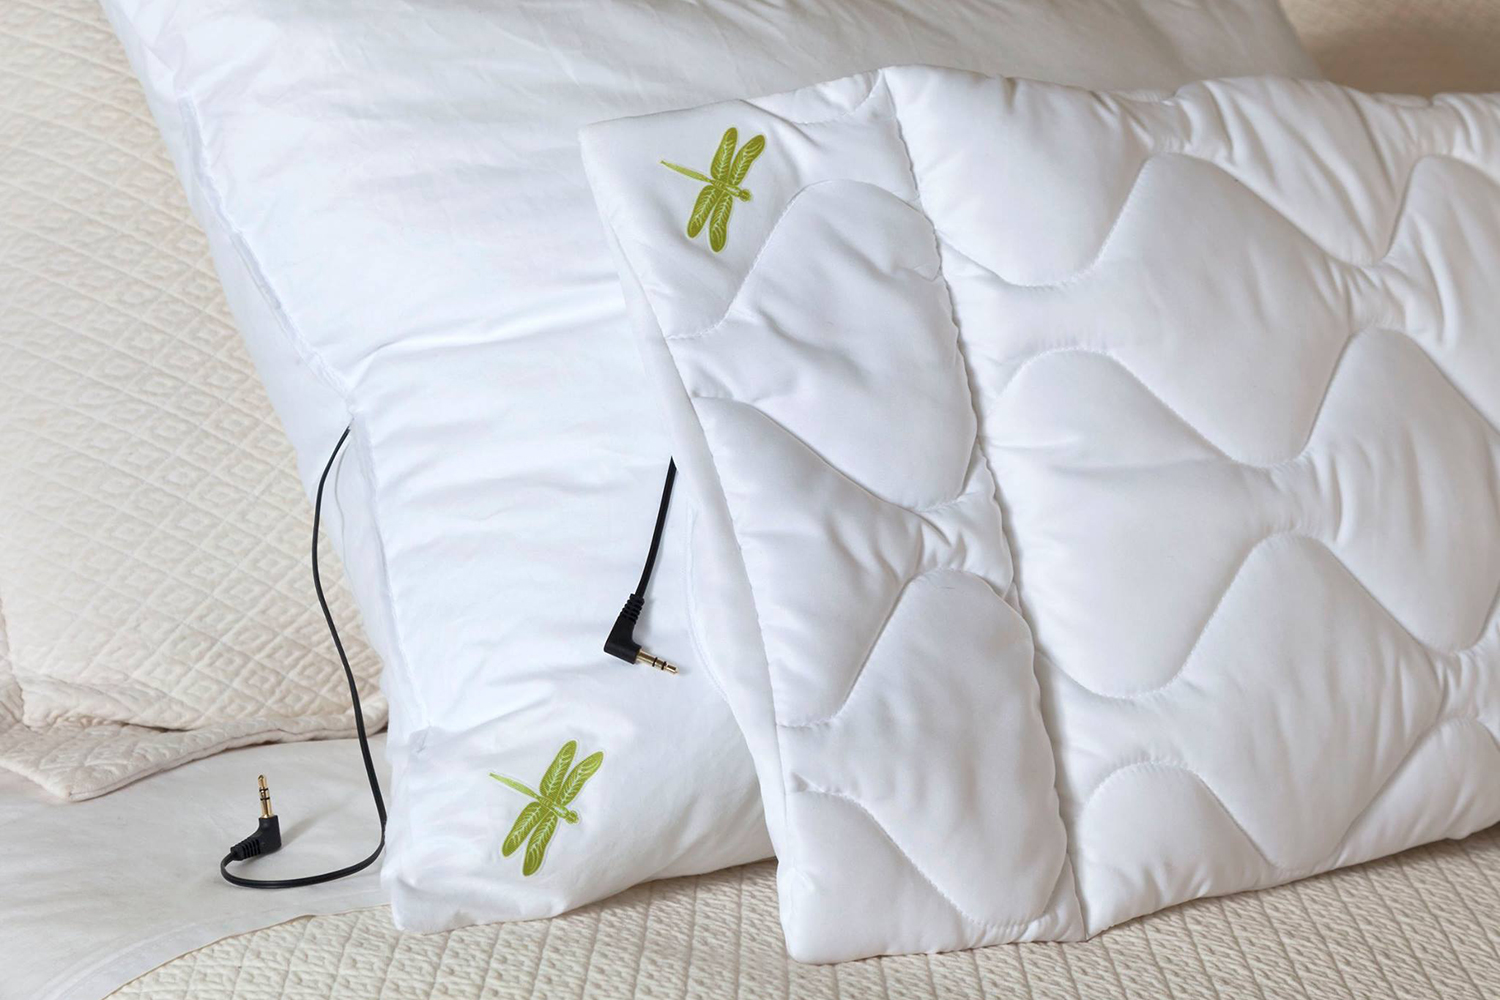 Dreampad pillow